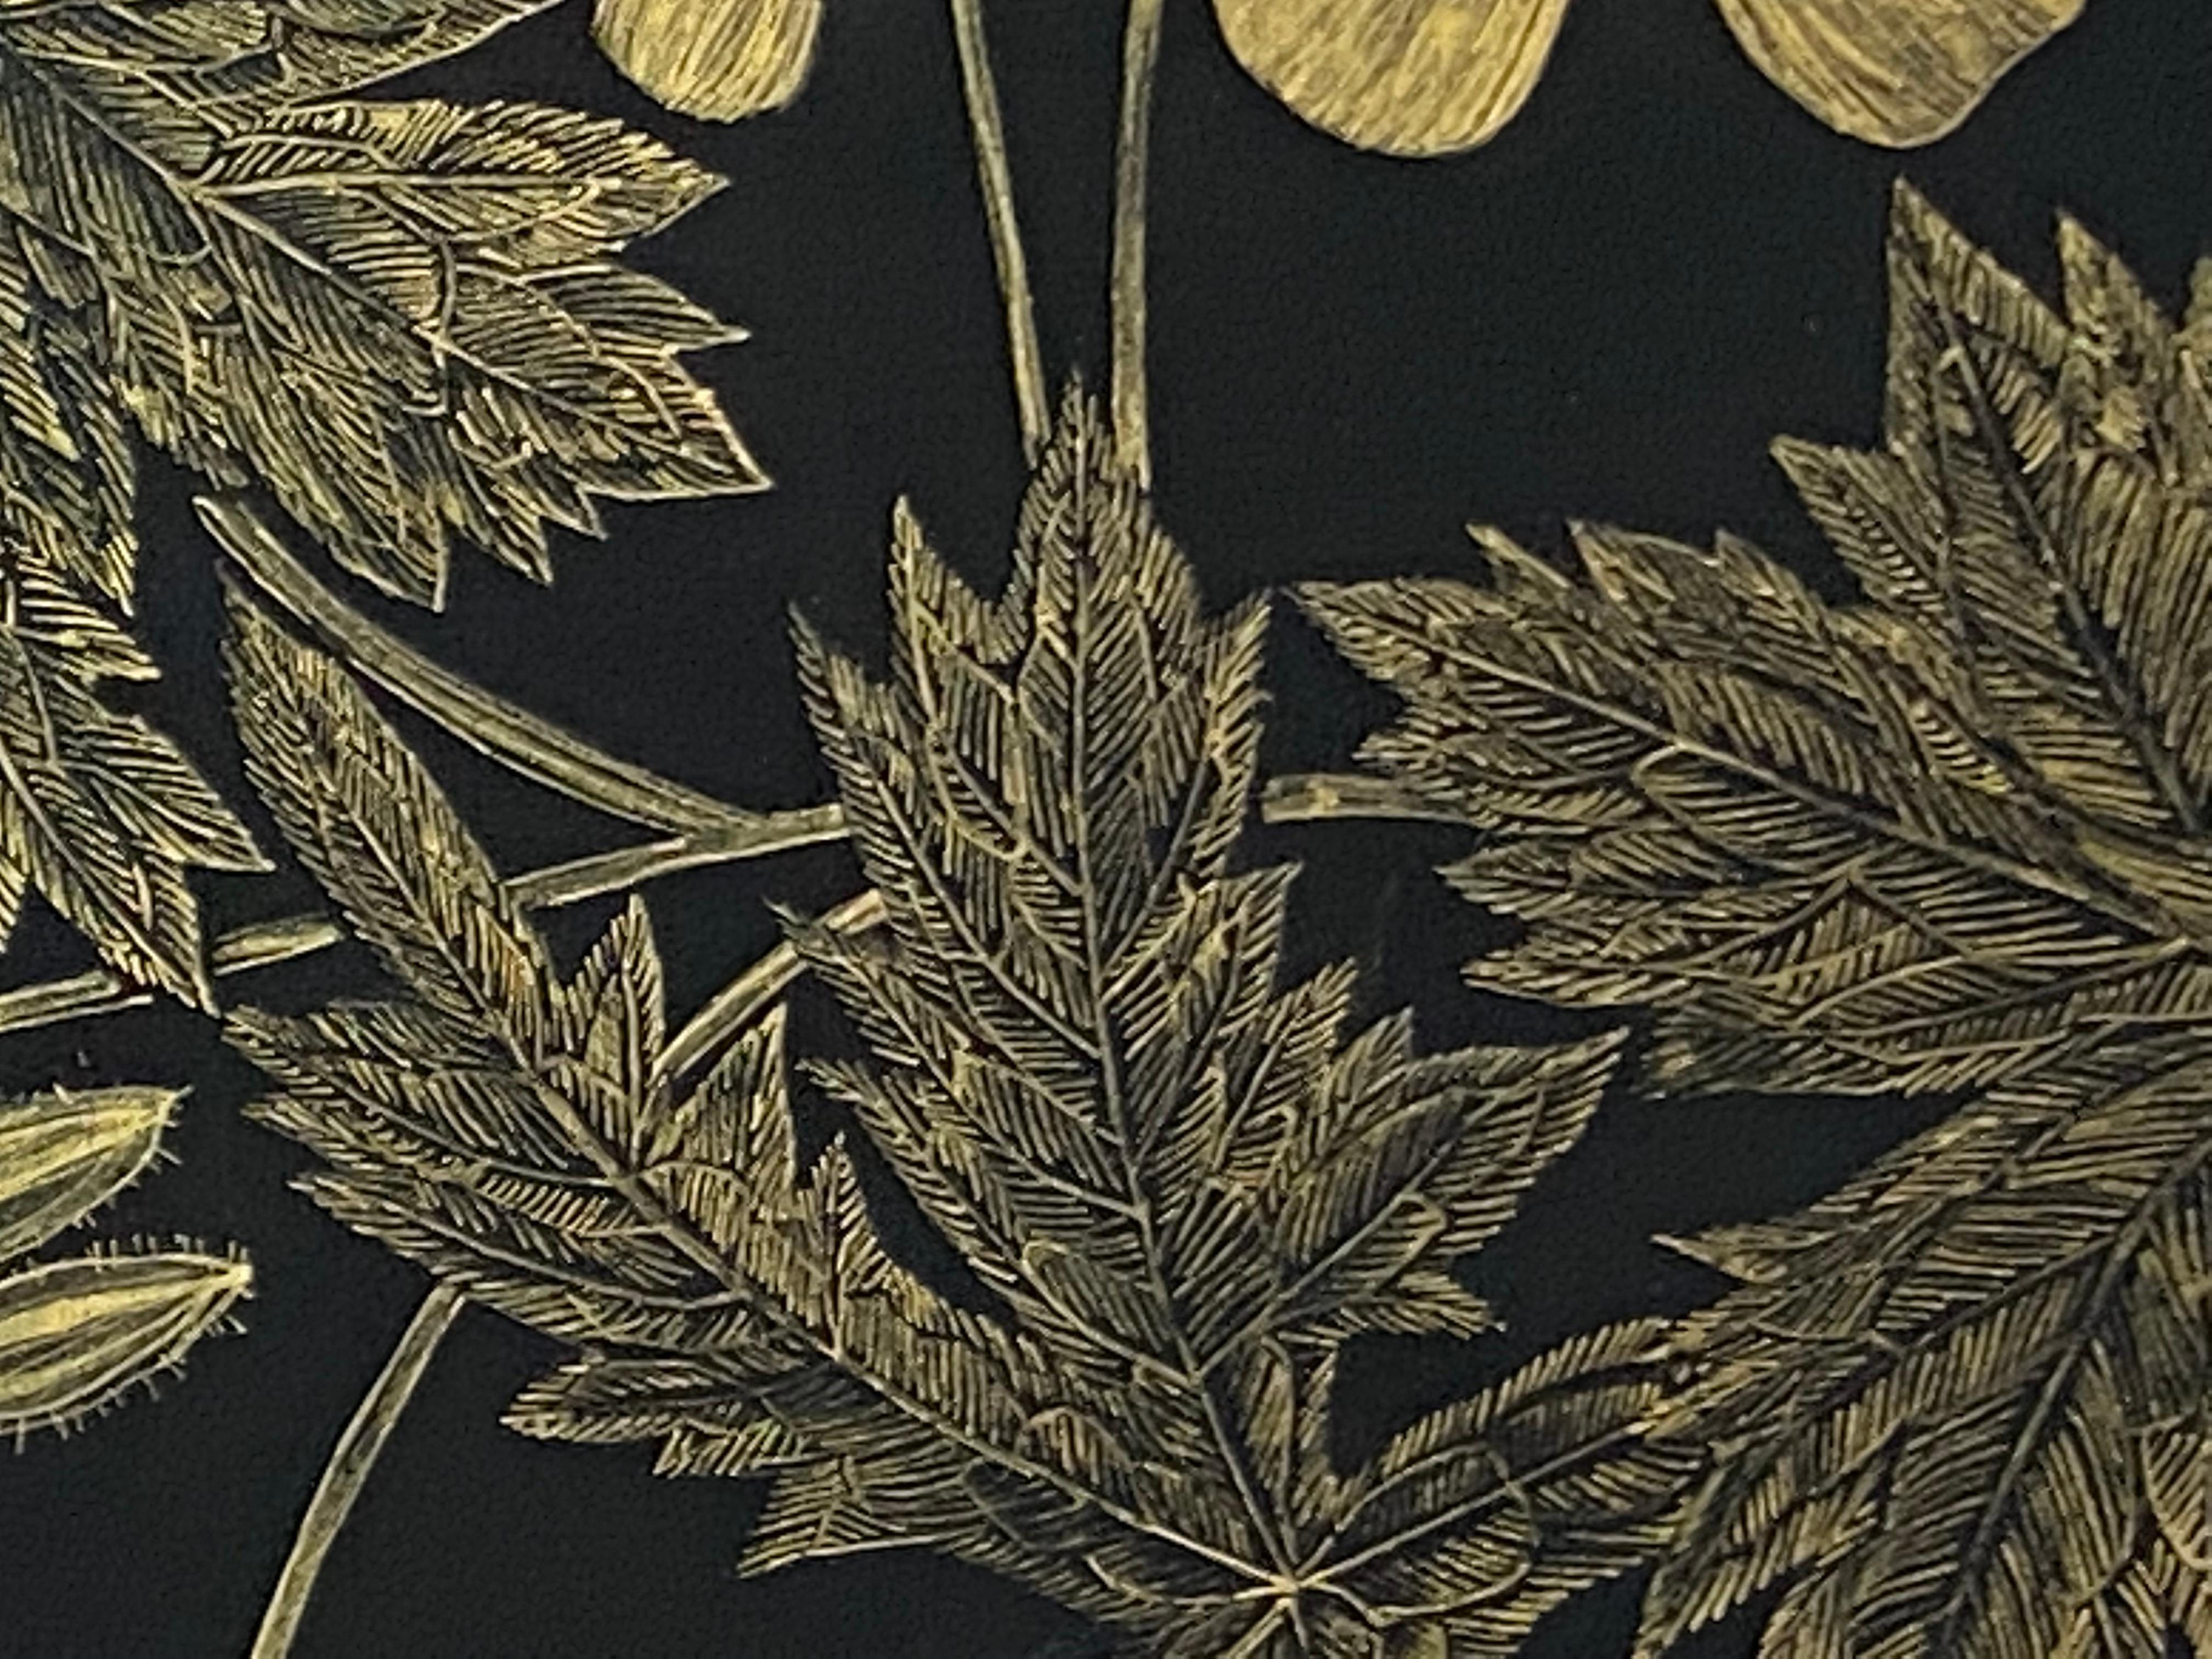 Wild Geranium, Botanical Painting on Black Panel with Gold Flowers, Leaves, Stem 7